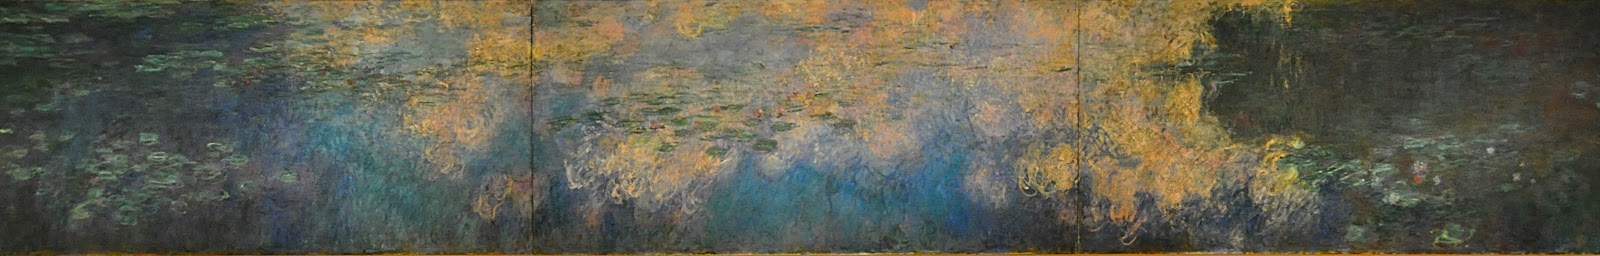 Claude+Monet-1840-1926 (606).jpg